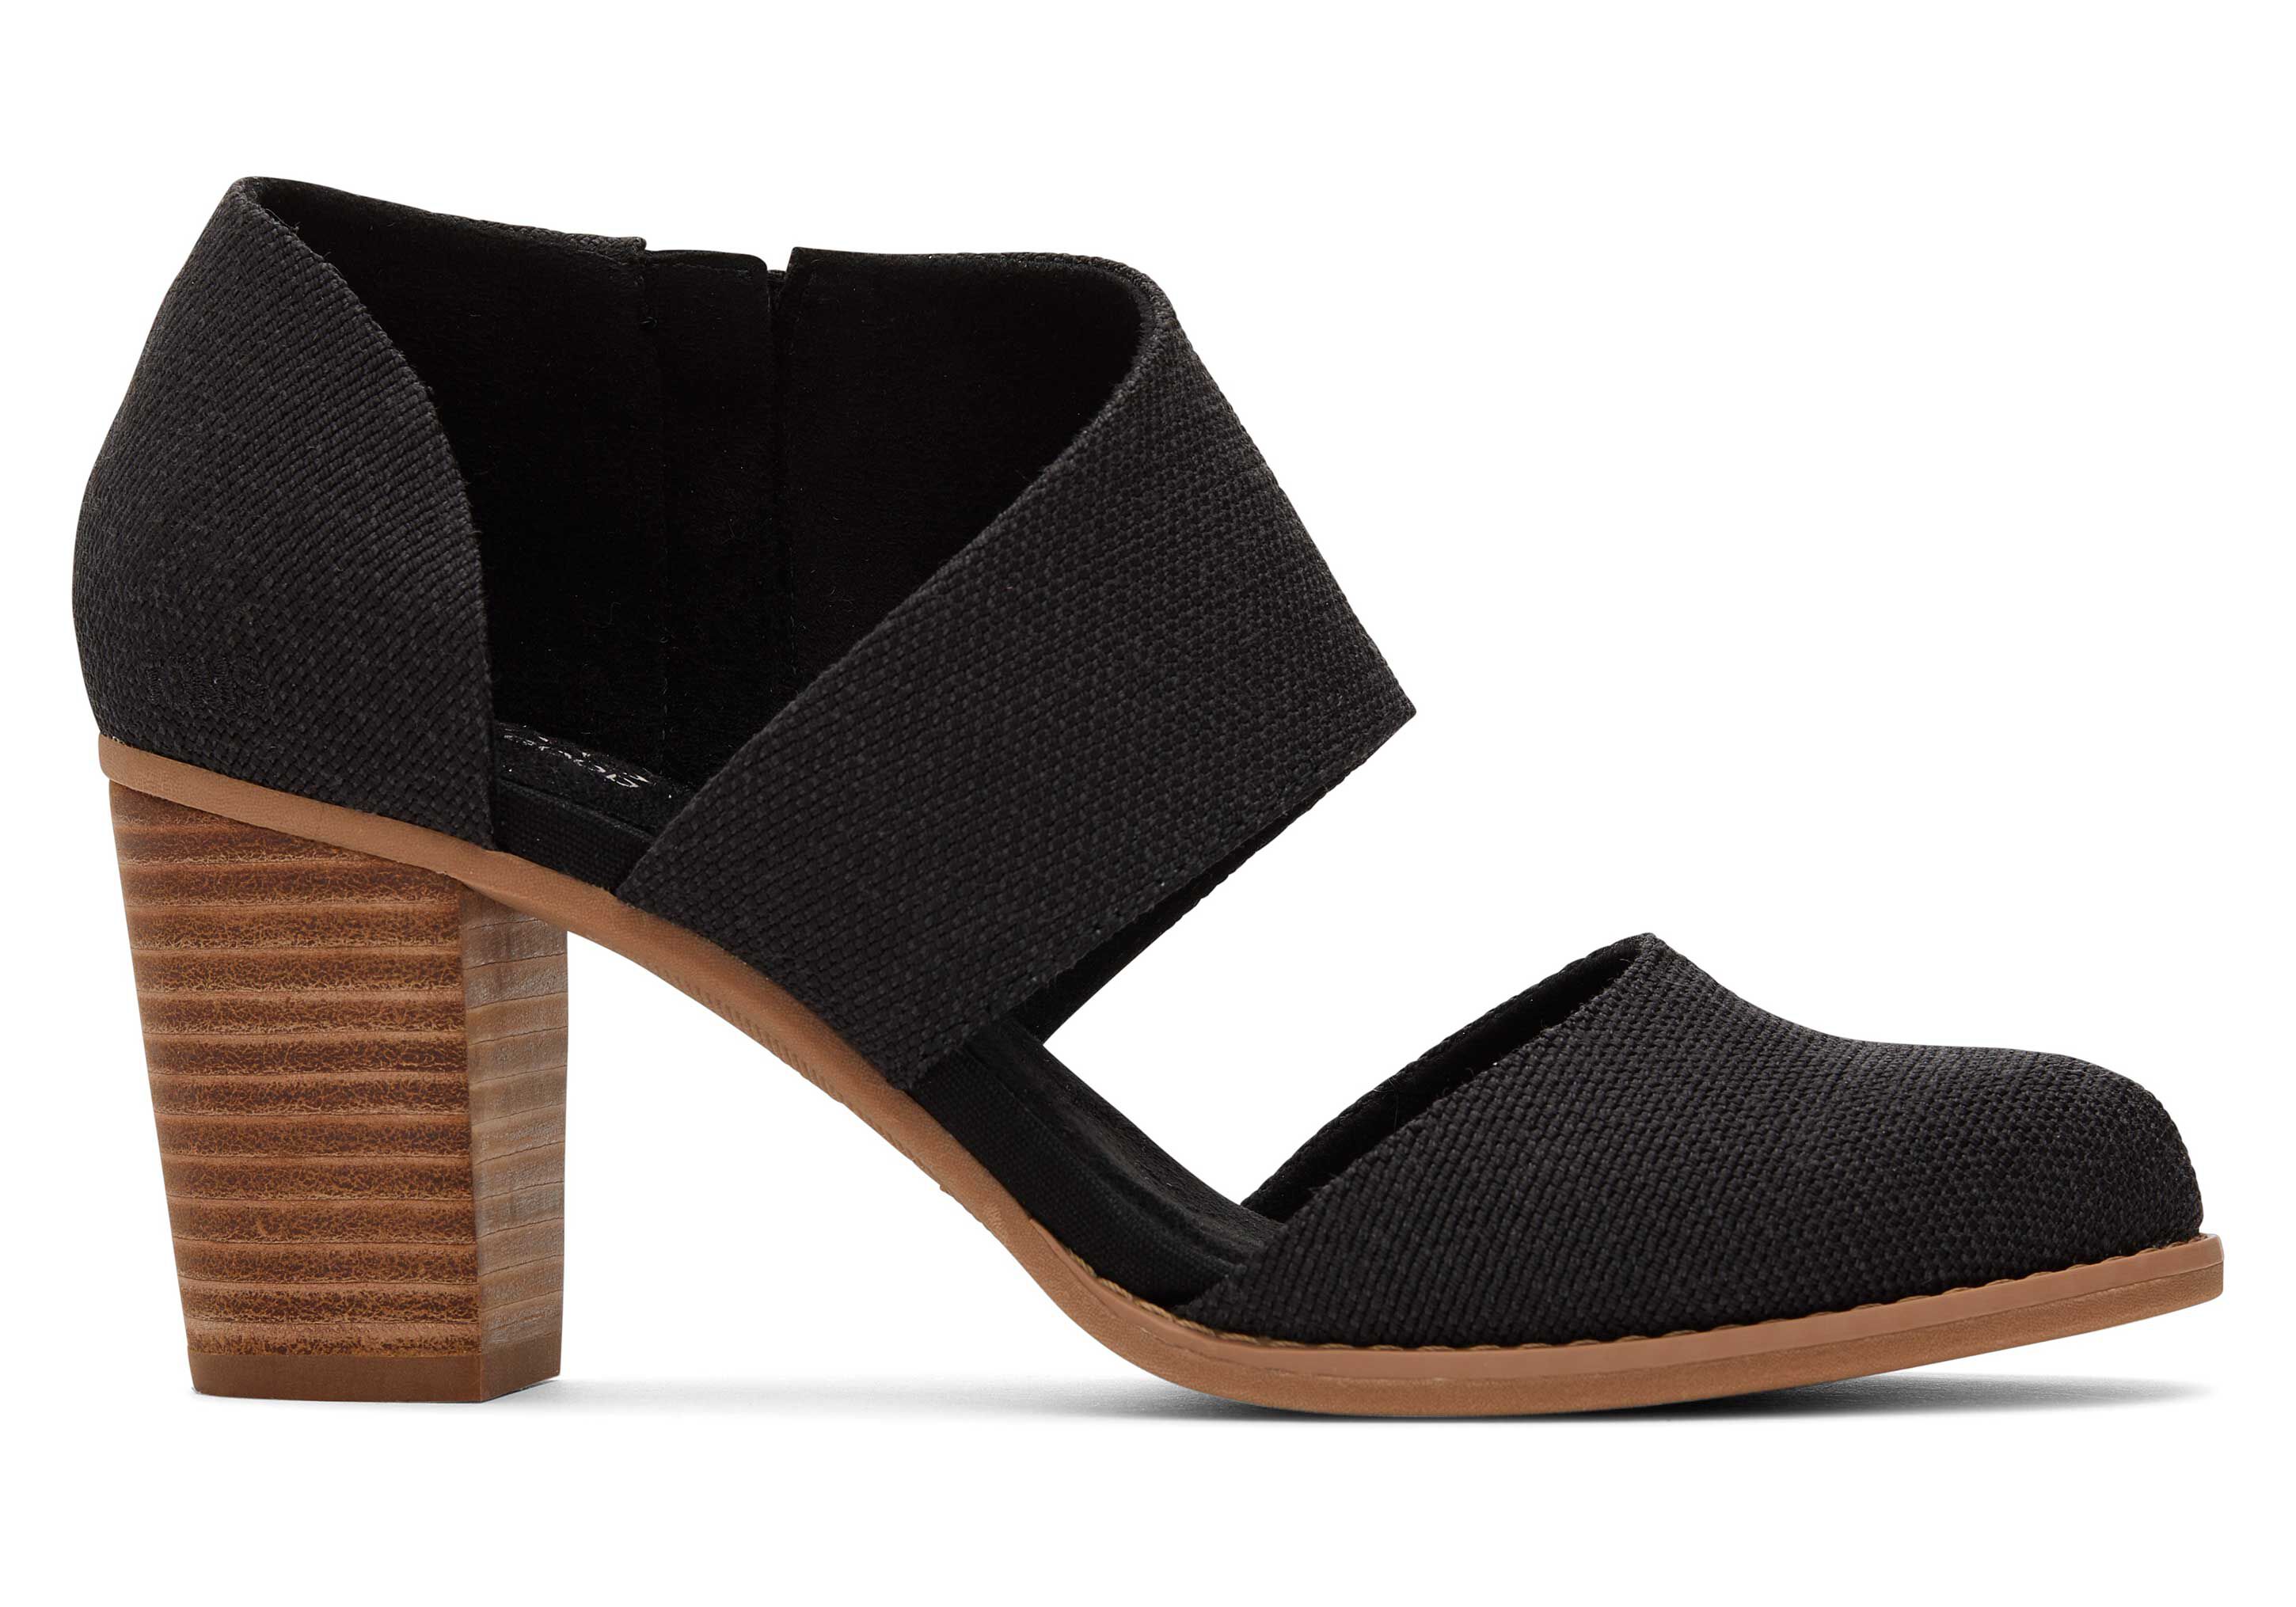 Classy Pure Black Round Toe High heels Fashion Shoes | Fashion high heels,  Shoes heels classy, Fashion shoes heels